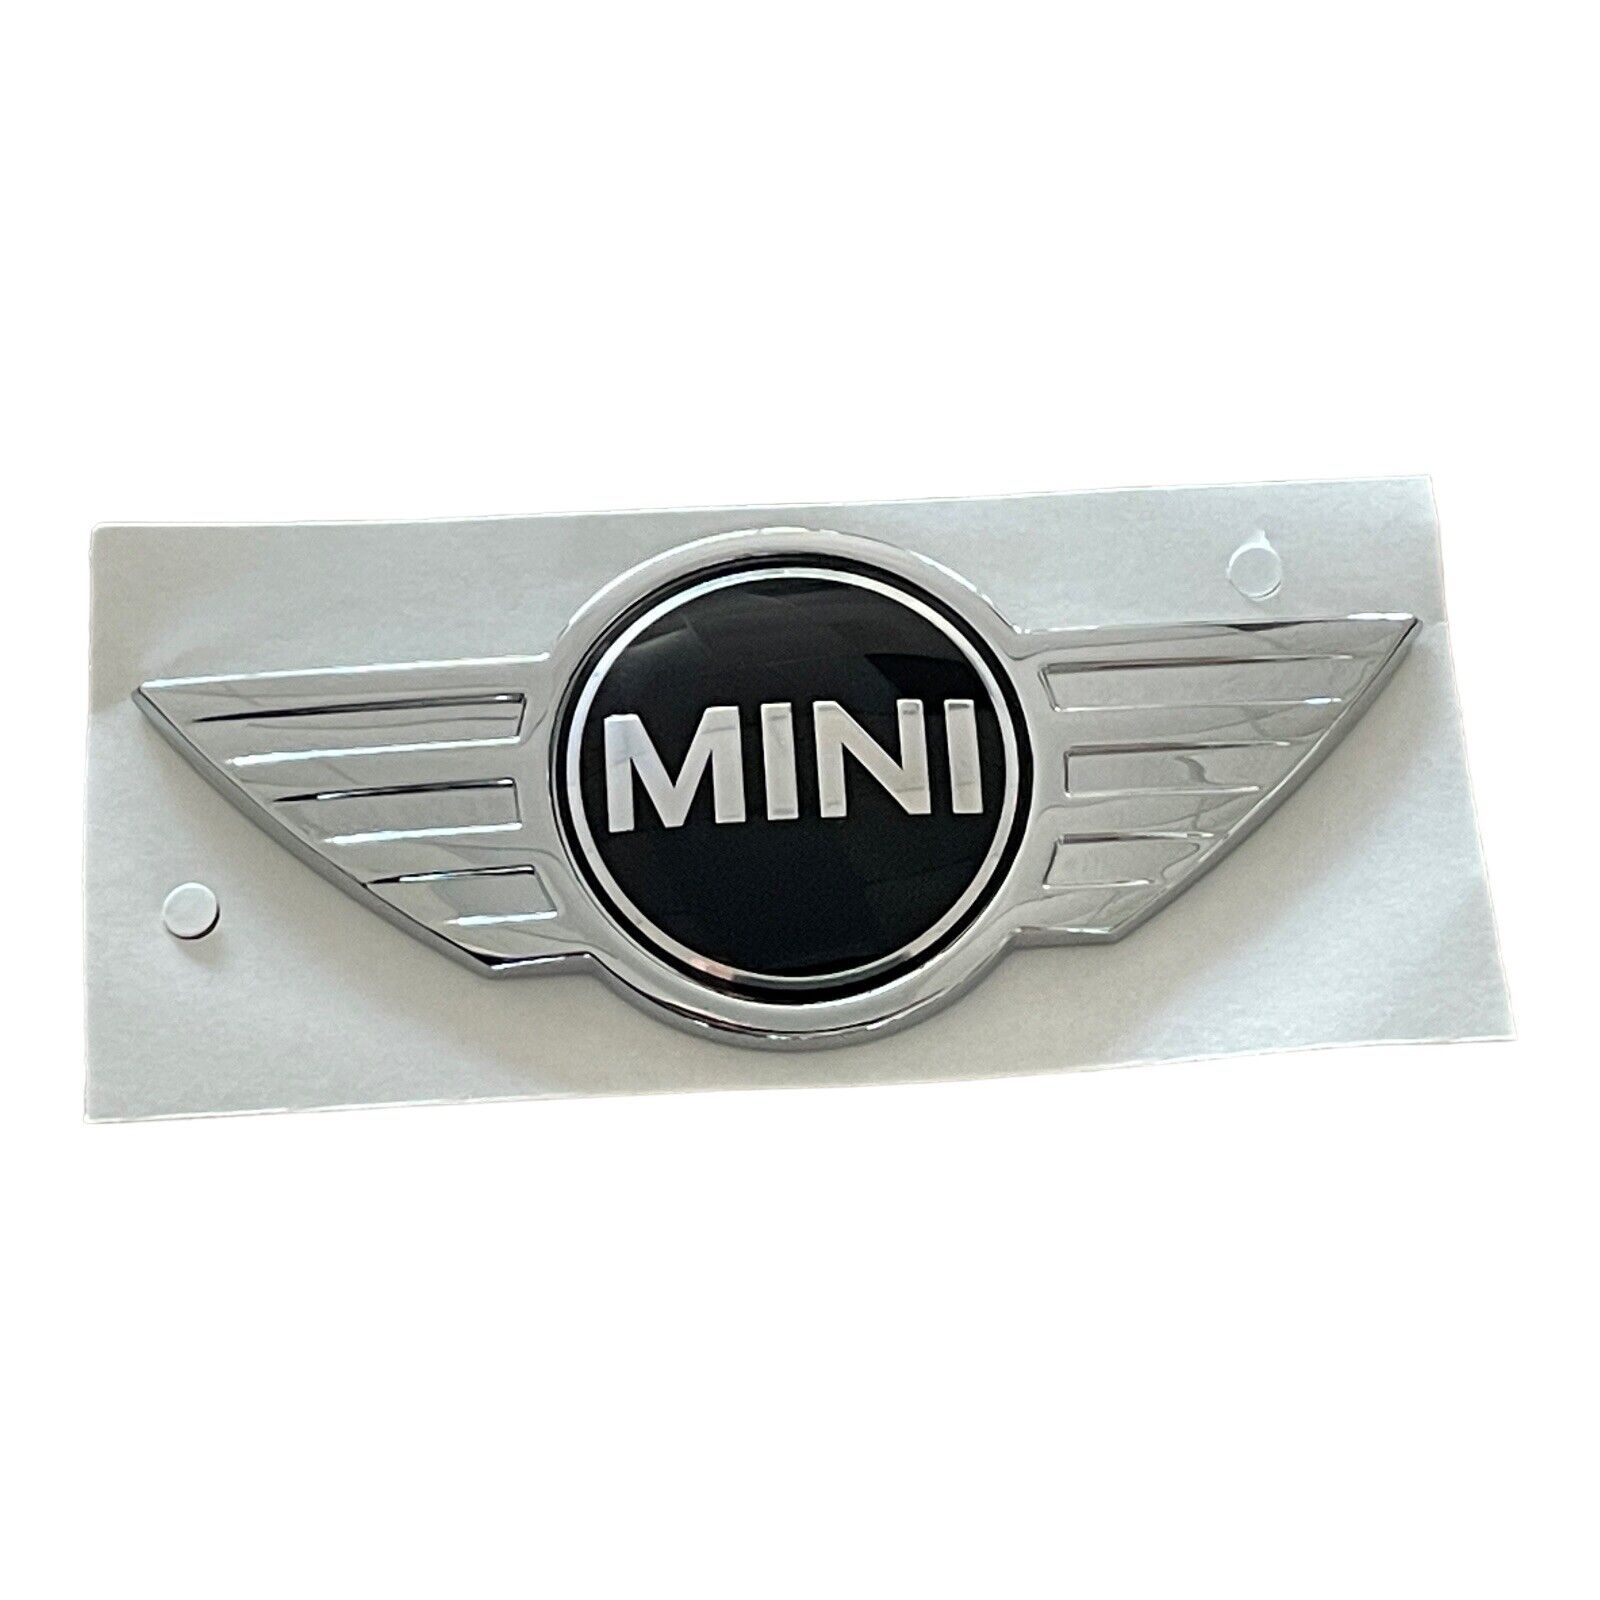 2007-2013 MINI Cooper S Rear Hatch Emblem Boot Badge 51147026186 R56 R57 New OEM